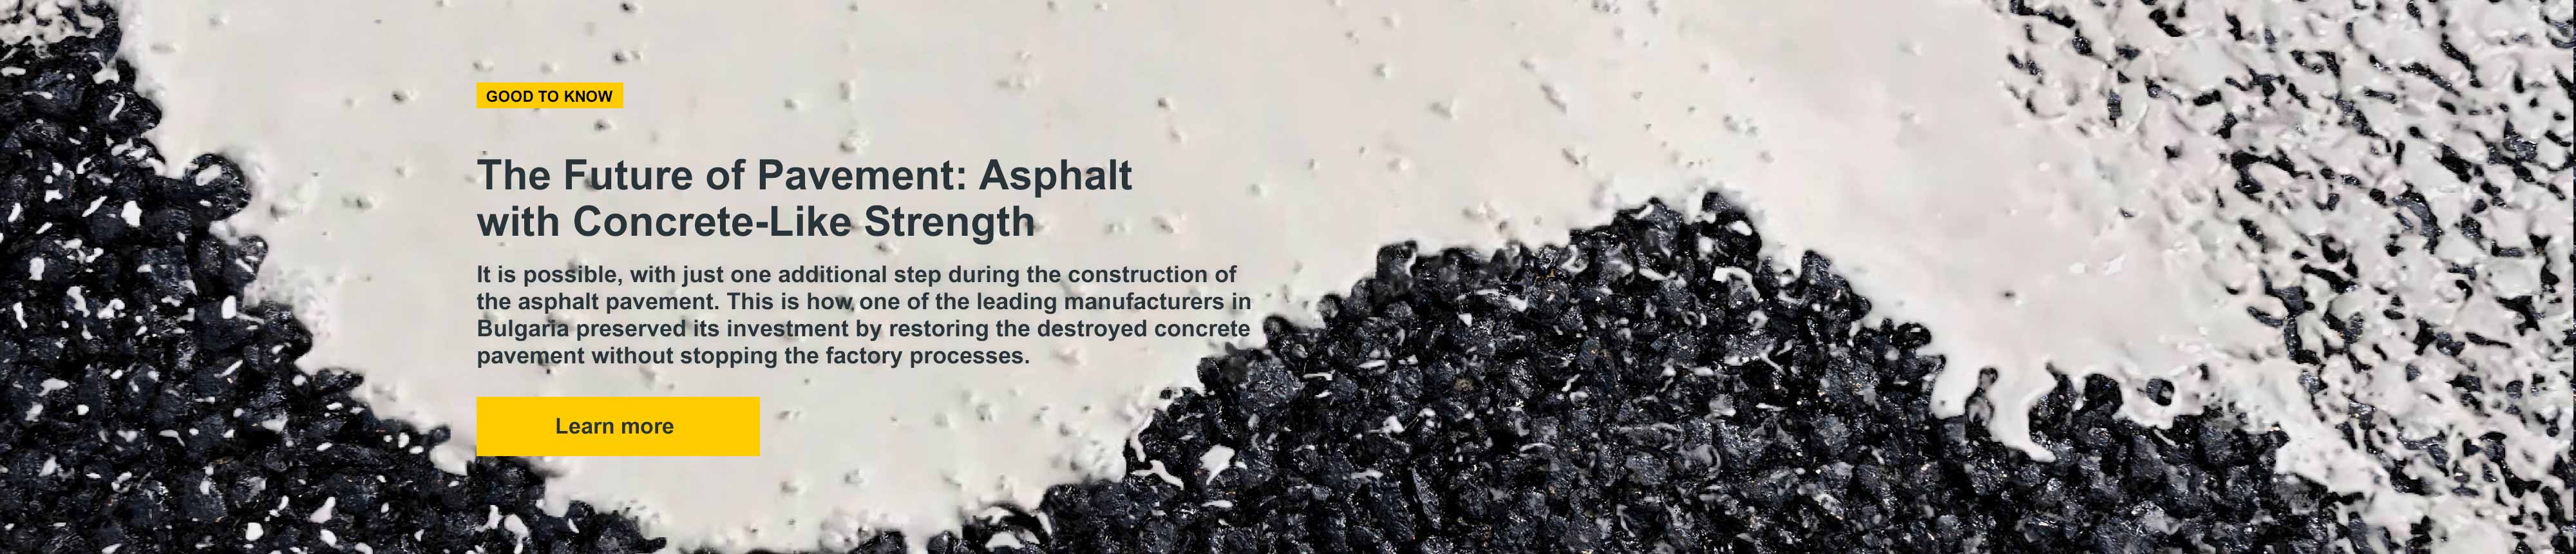 Asphalt that's as Strong as Concrete?